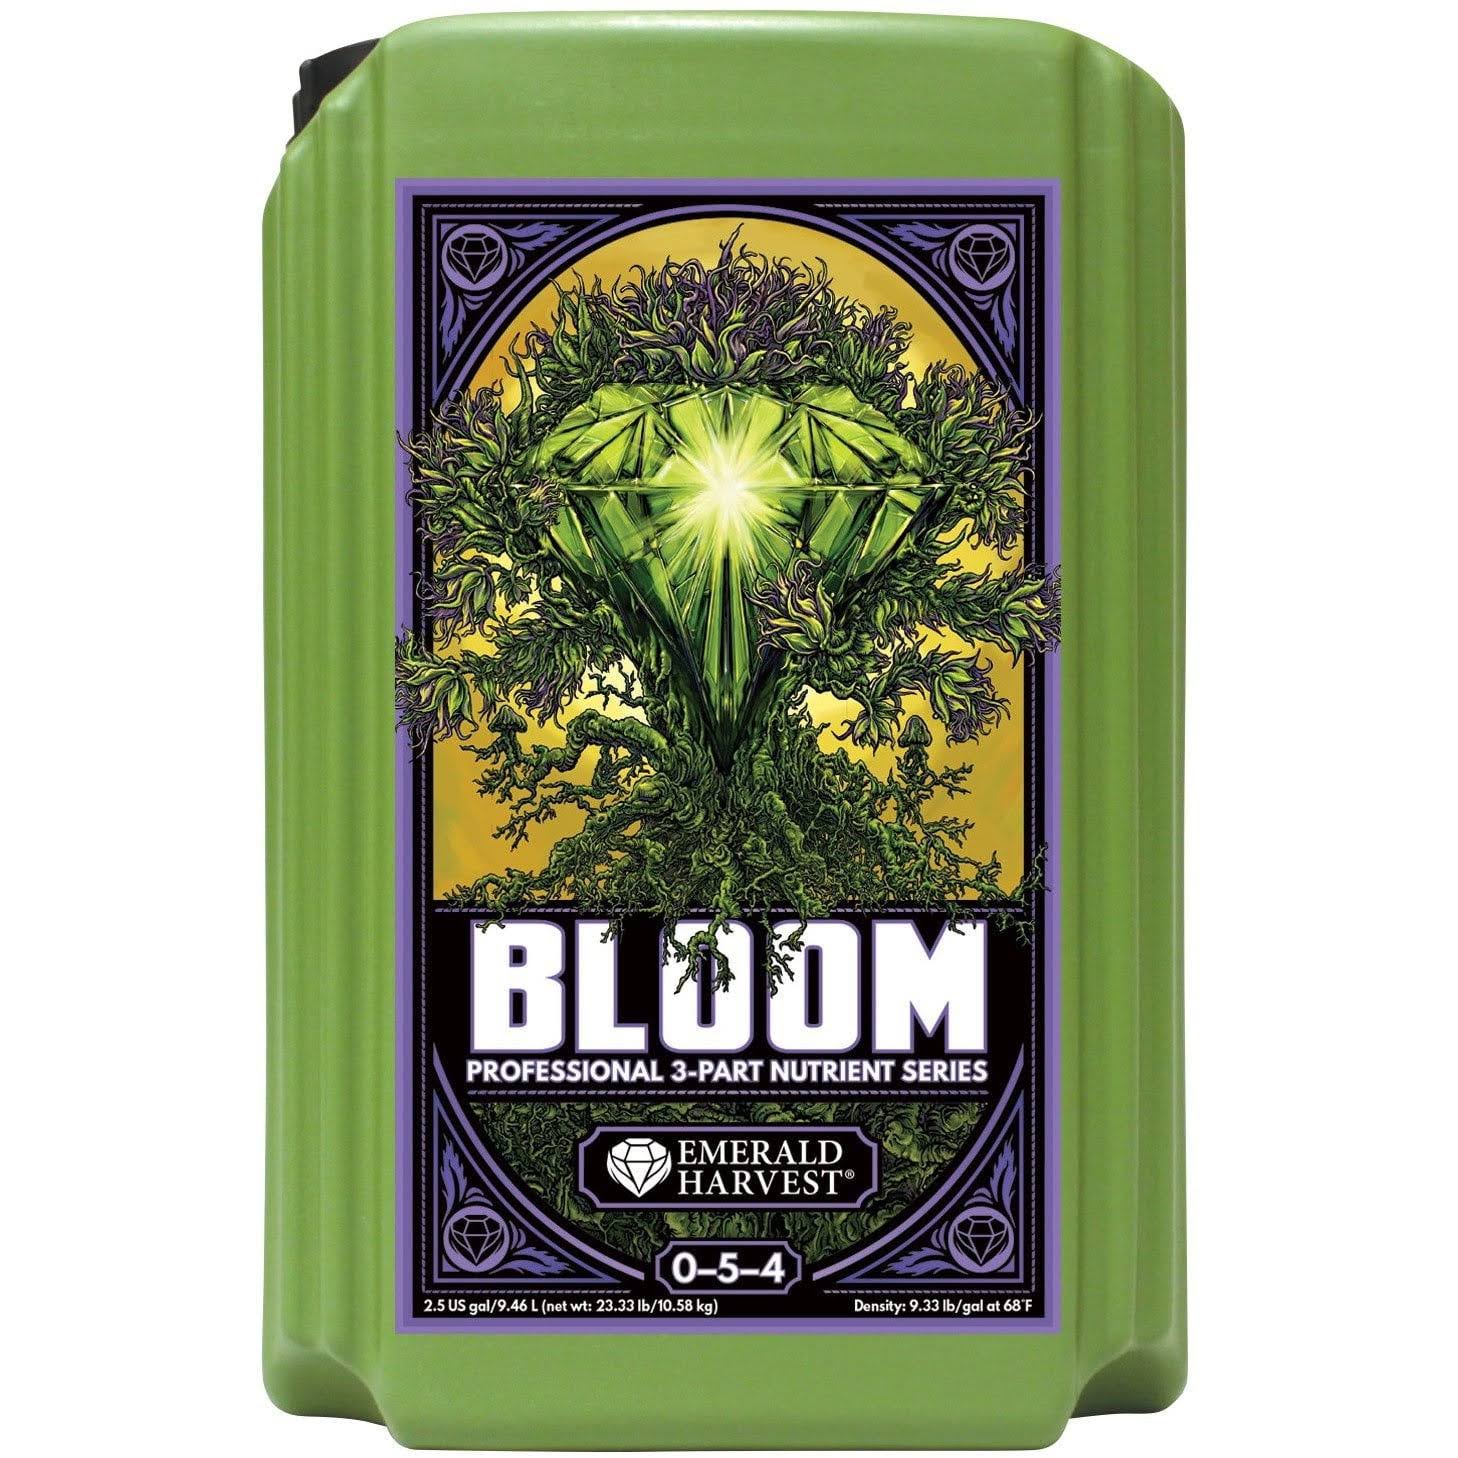 Emerald Harvest Bloom 0 - 5 - 4 2.5 Gal/9.46 L